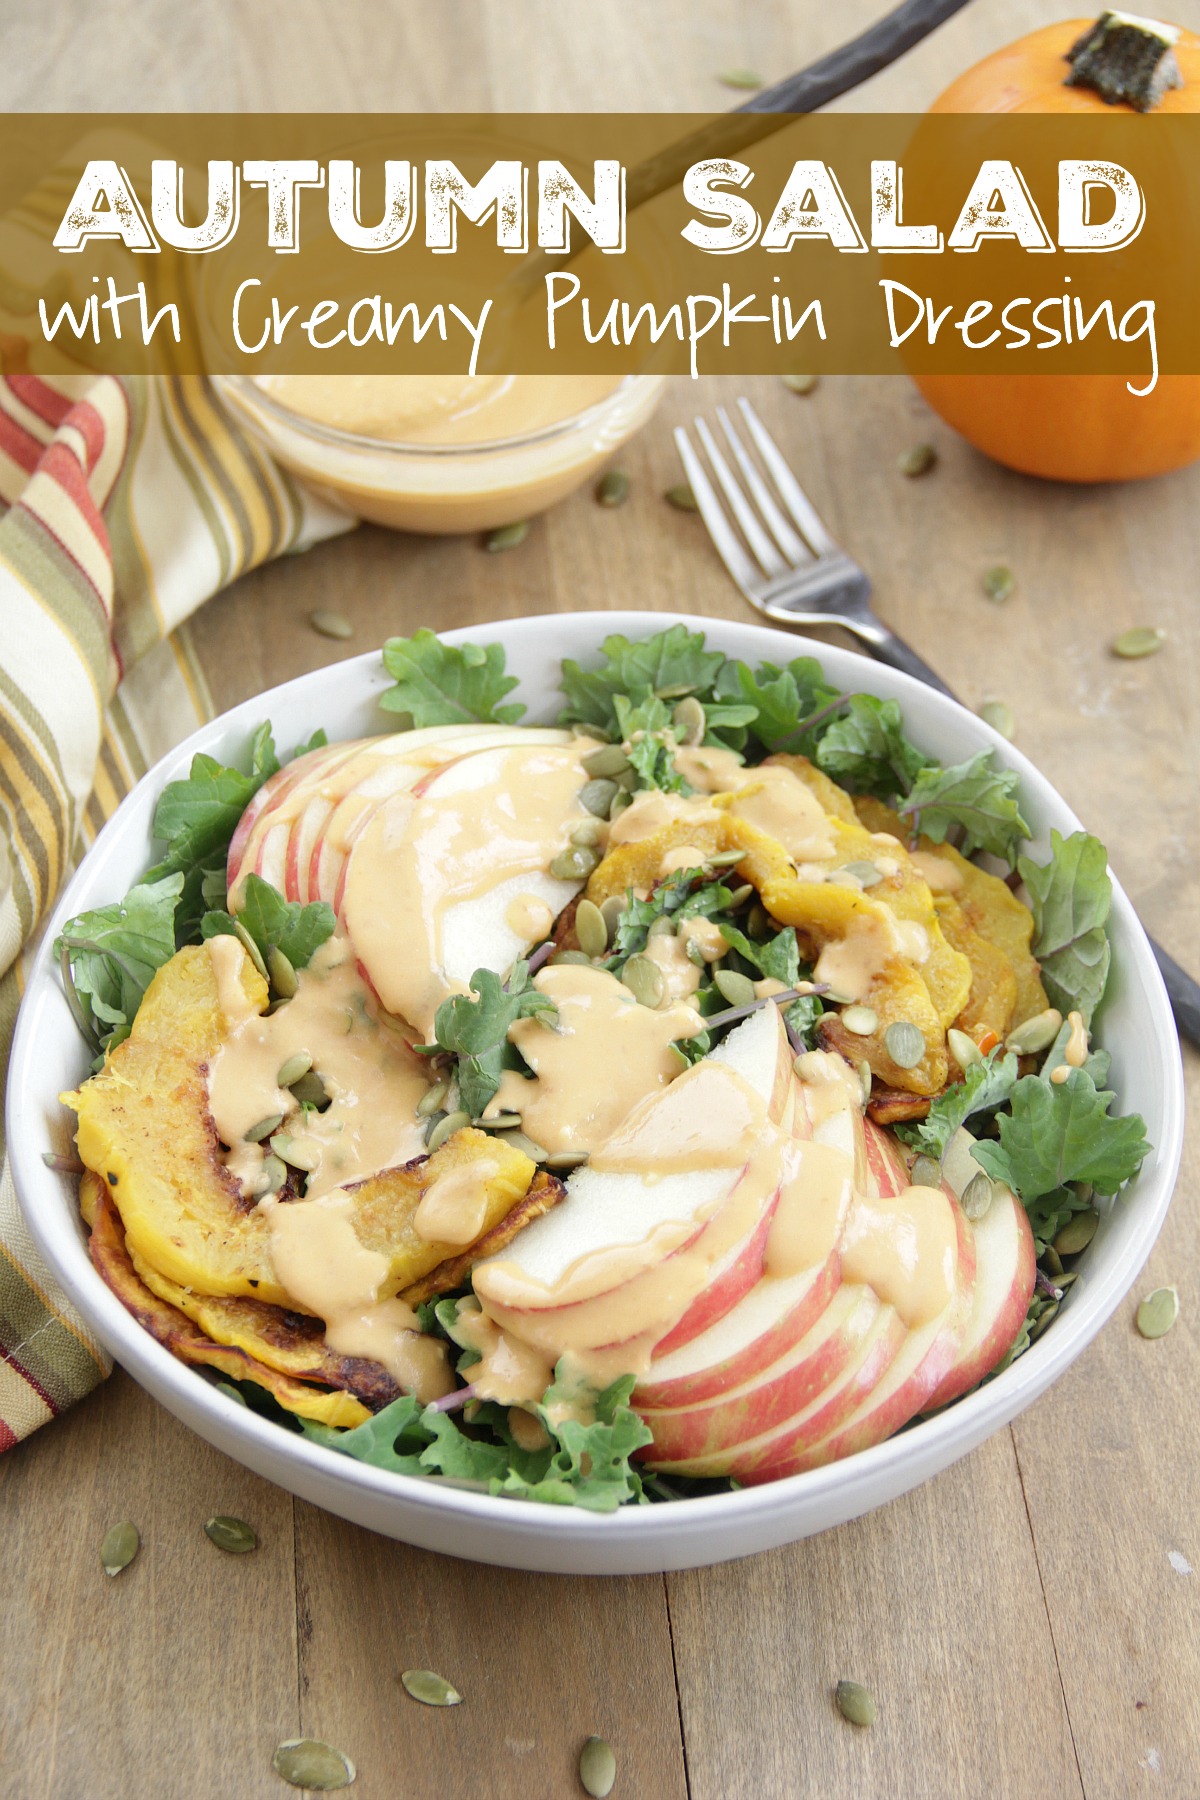 Autumn Salad with Creamy Pumpkin Dressing